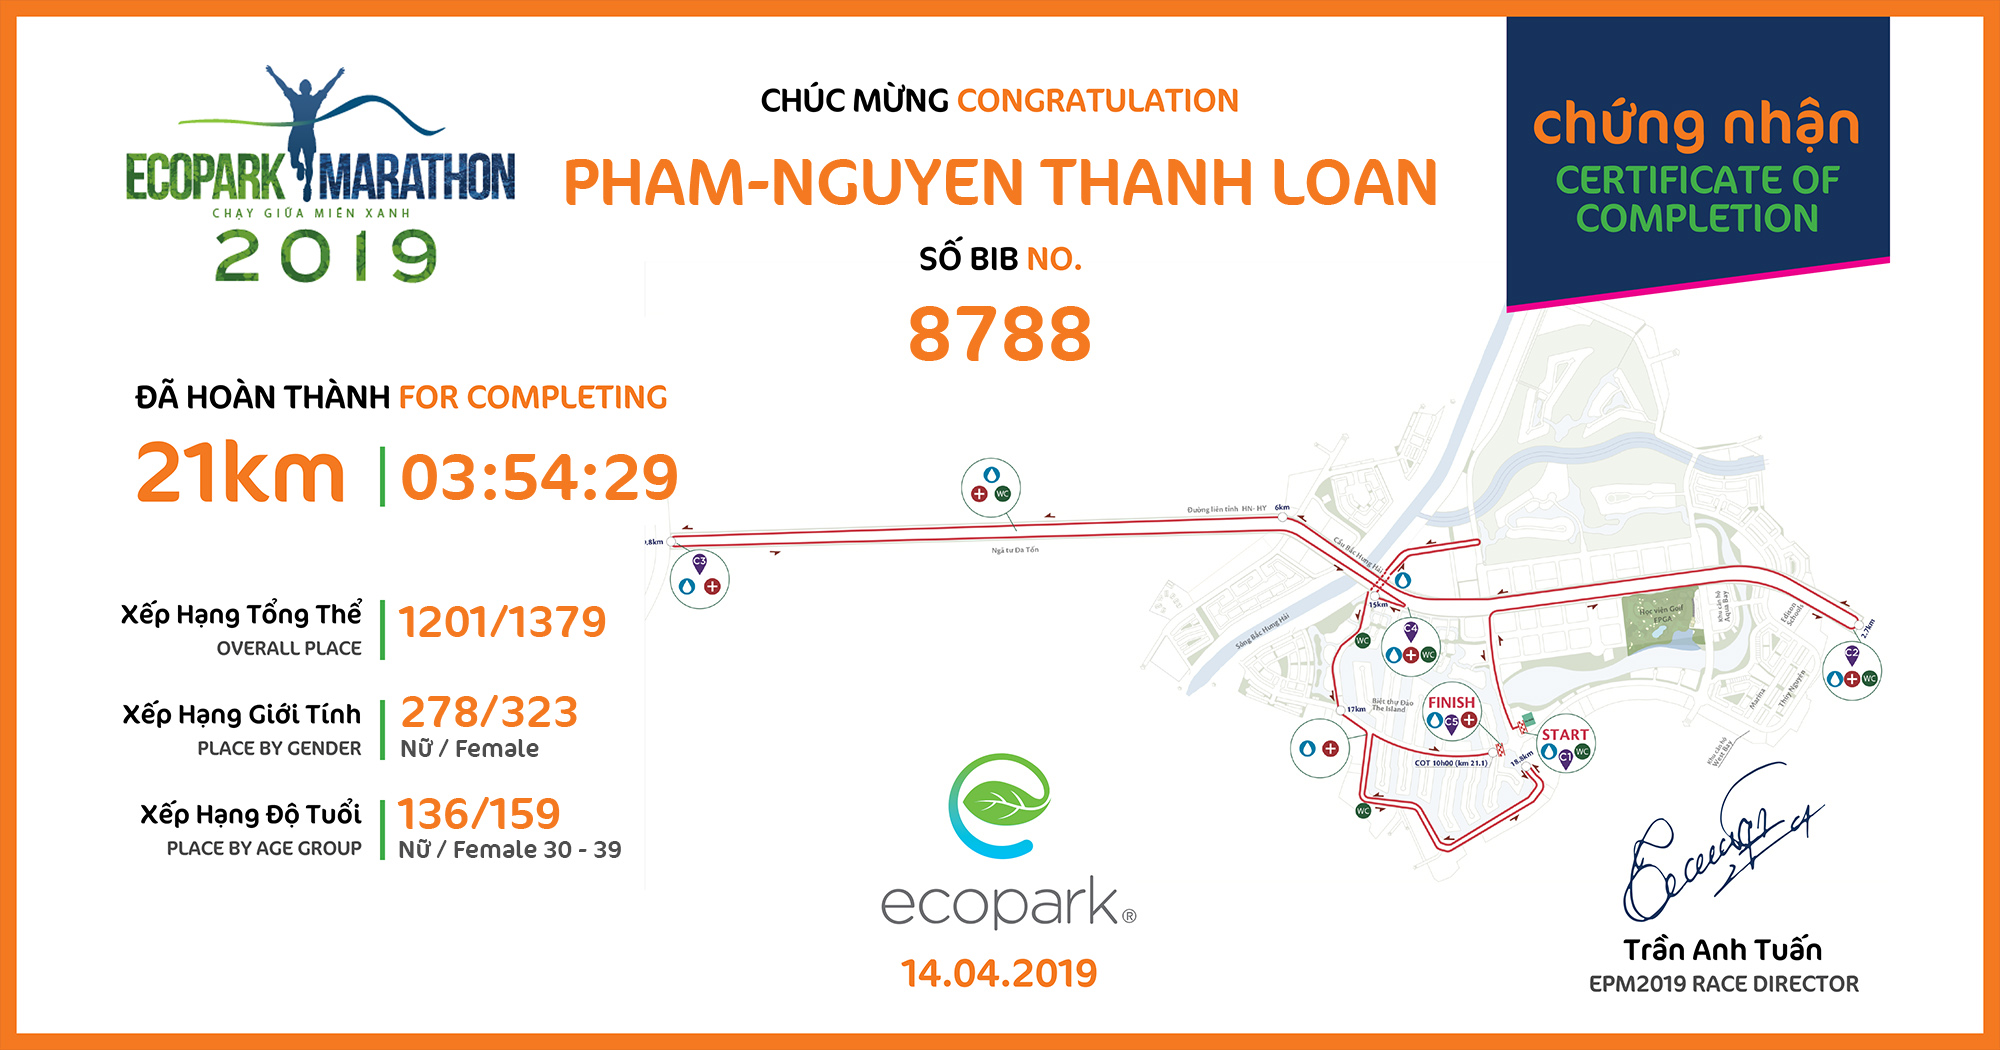 8788 - Pham-Nguyen Thanh Loan